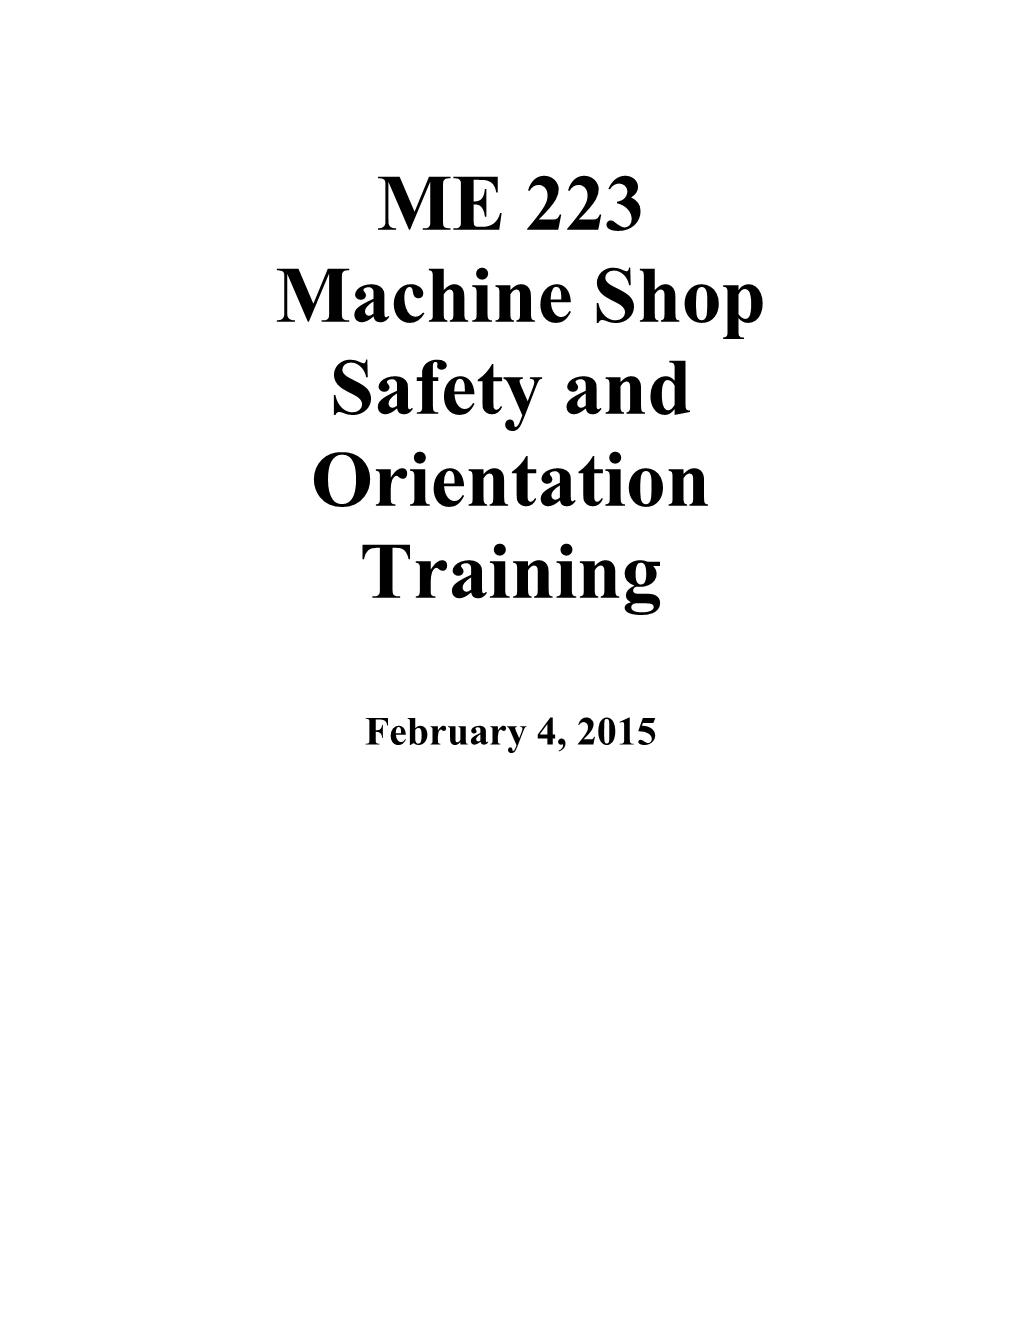 Machine Shop Safety and Orientation Training